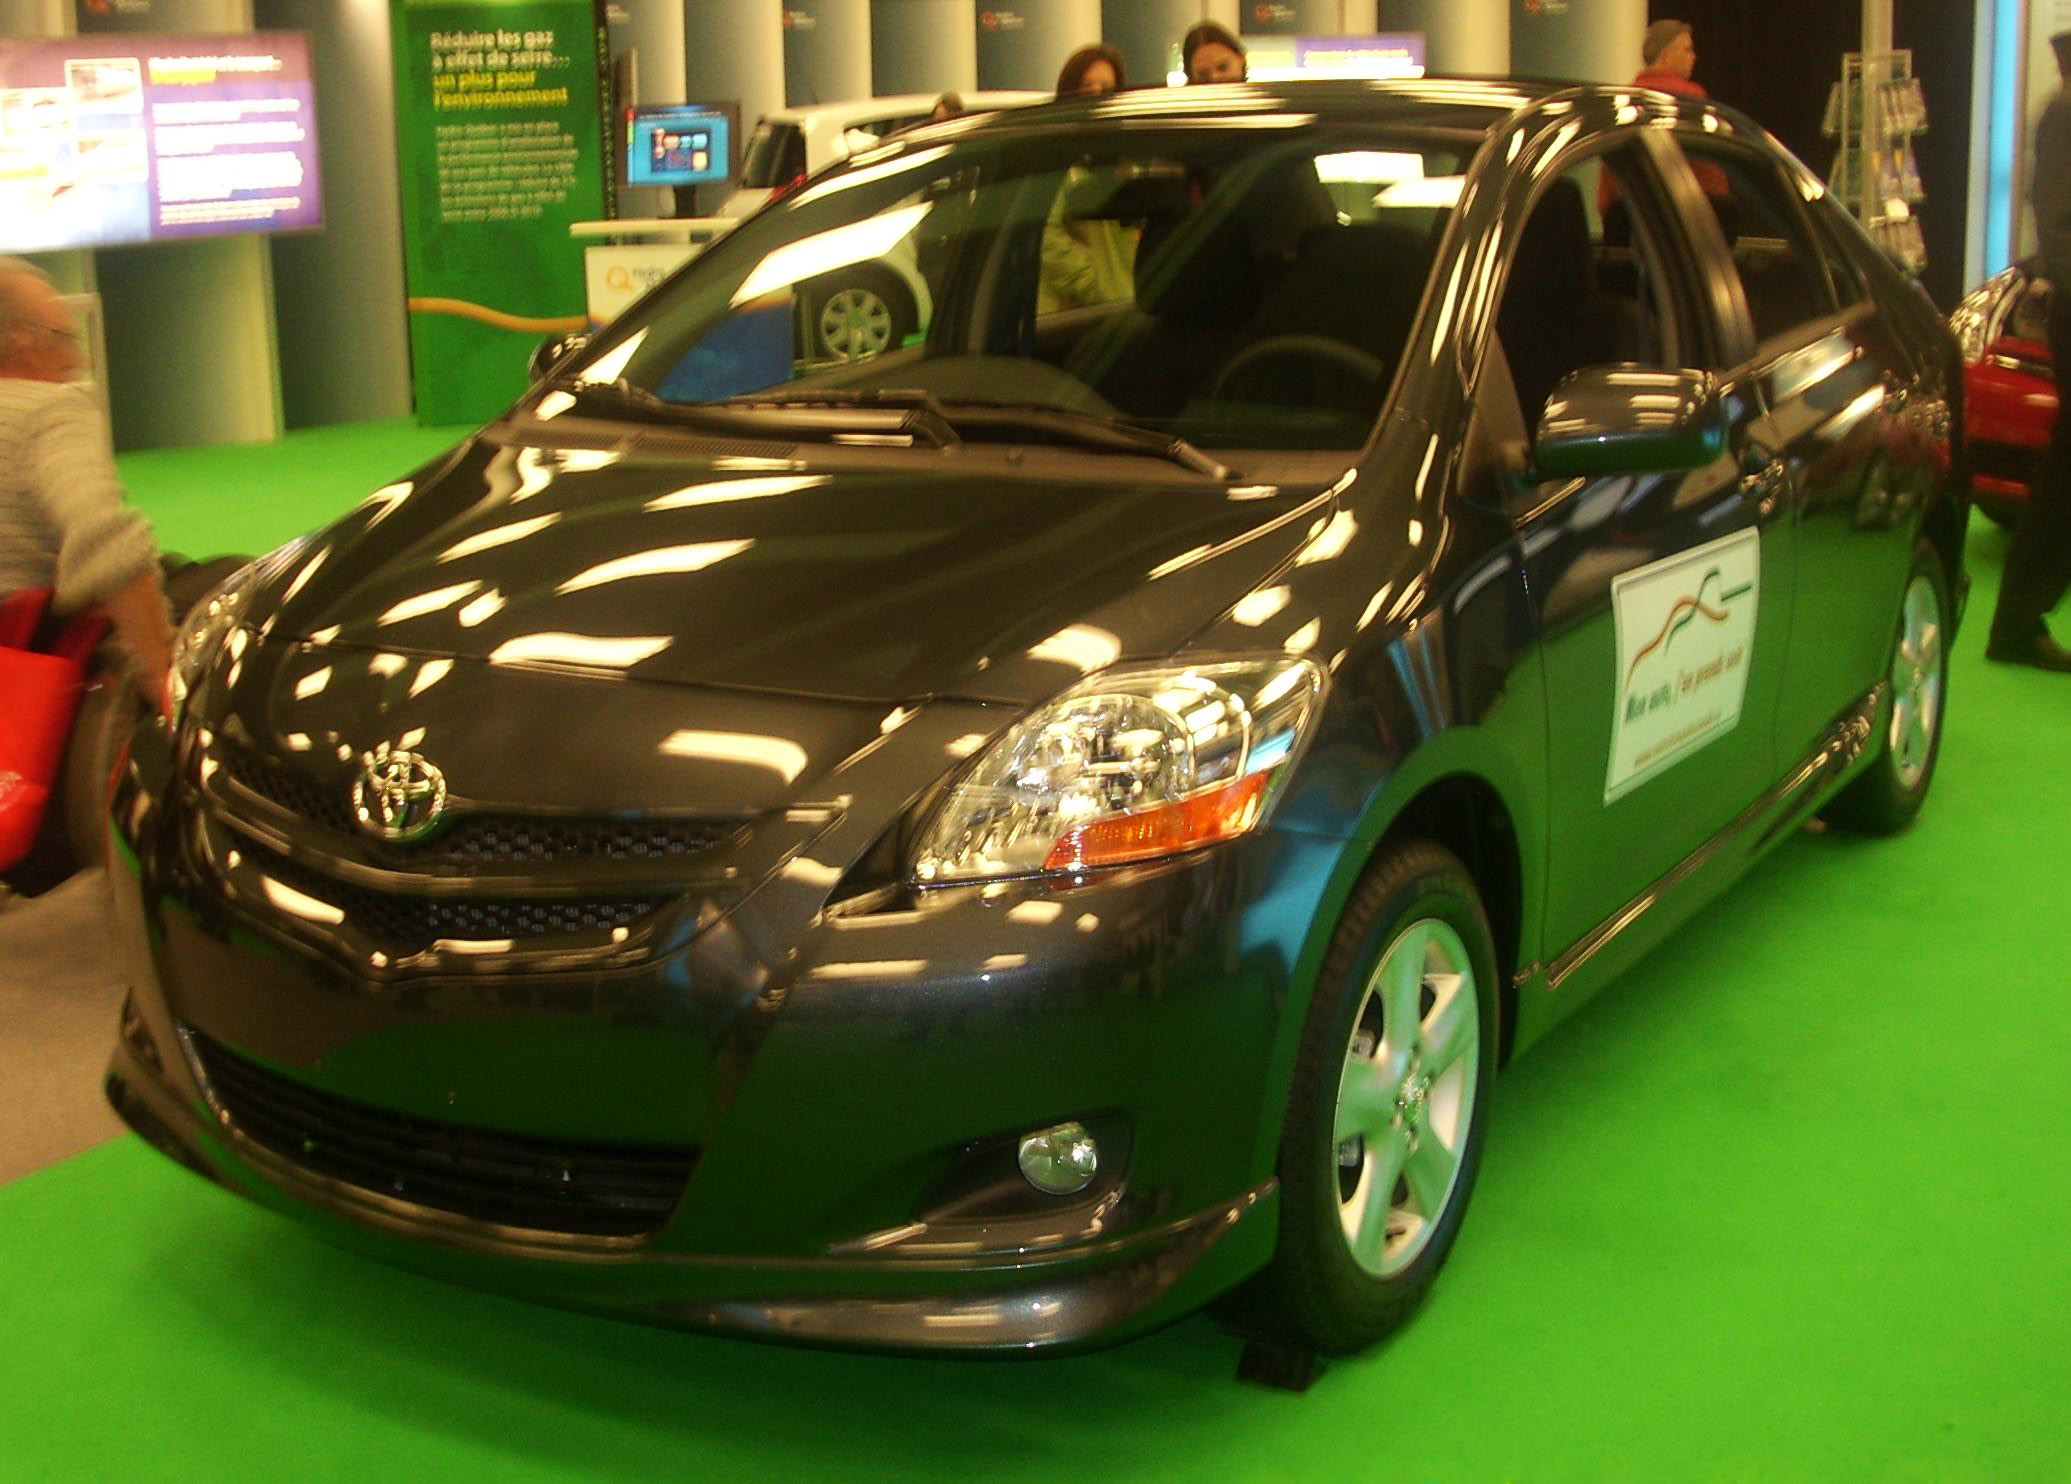 http://upload.wikimedia.org/wikipedia/commons/d/d7/%2708_Toyota_Yaris_Sedan_(Montreal).jpg